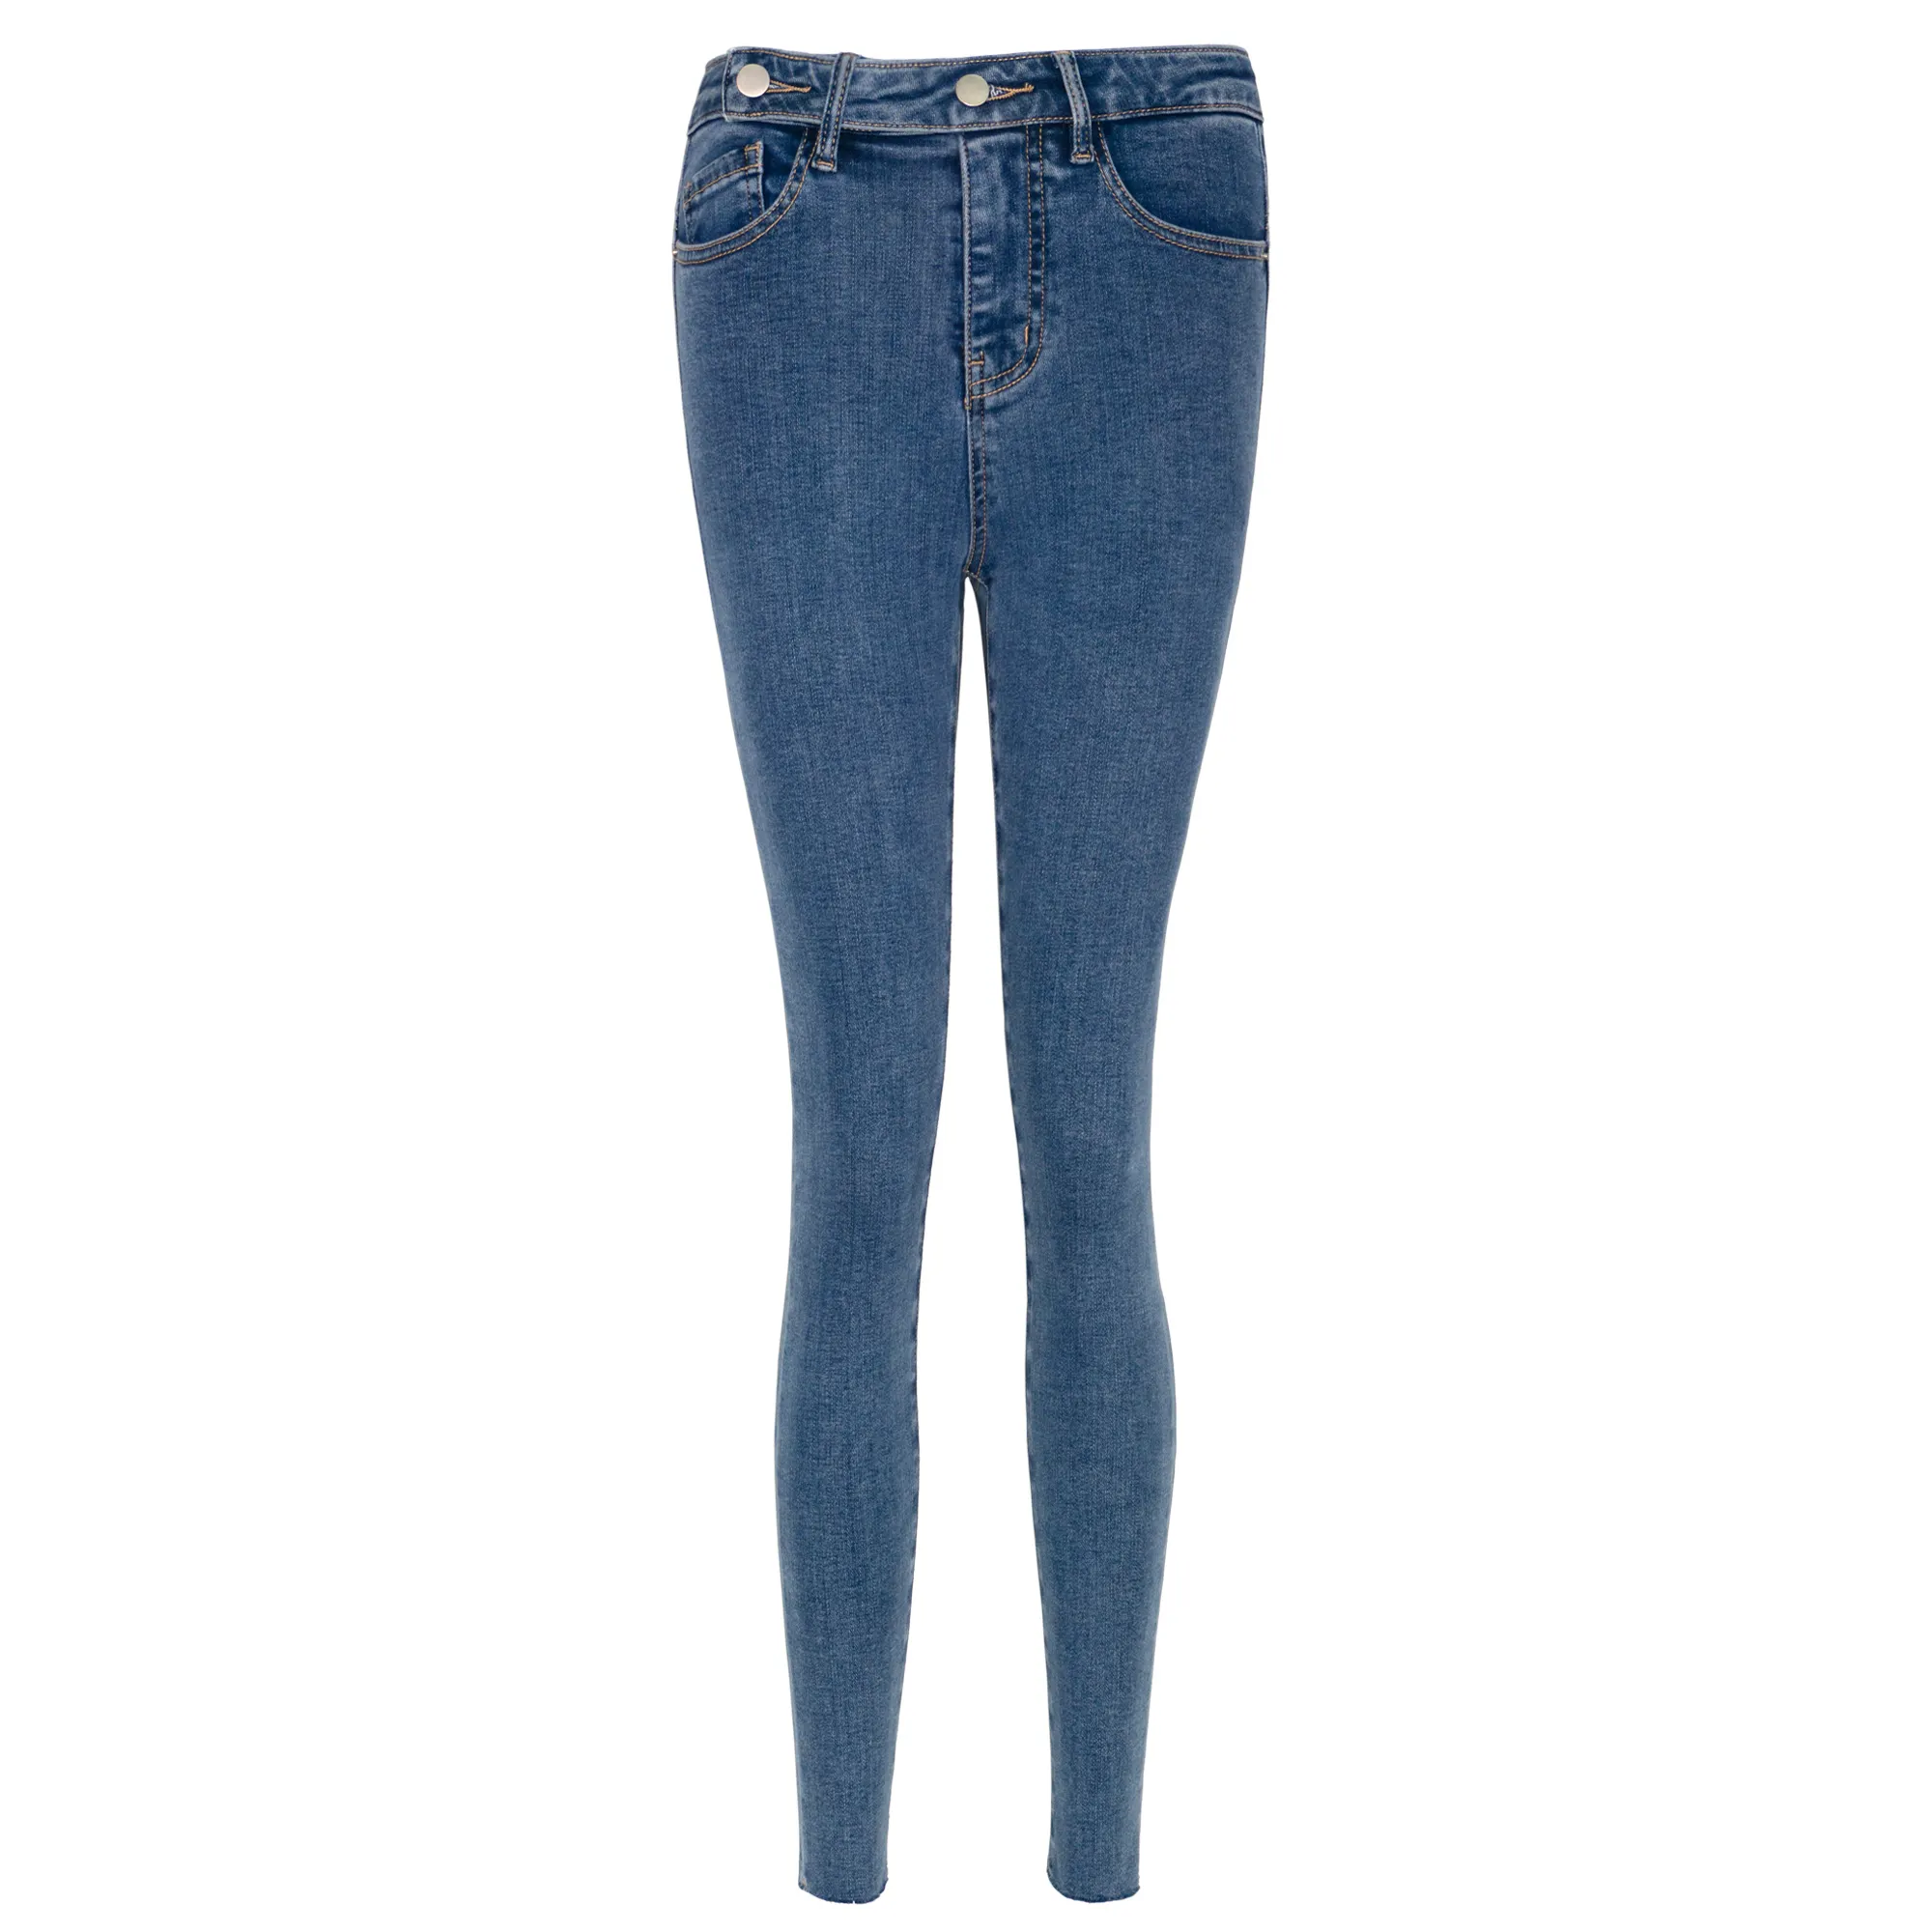 Hotsale Super Stretch Blue Denim Jeans Spandex Butt Lifting Push Up Women Jeans Compression Wear Butt Enhancing Sexy Jeans Denim